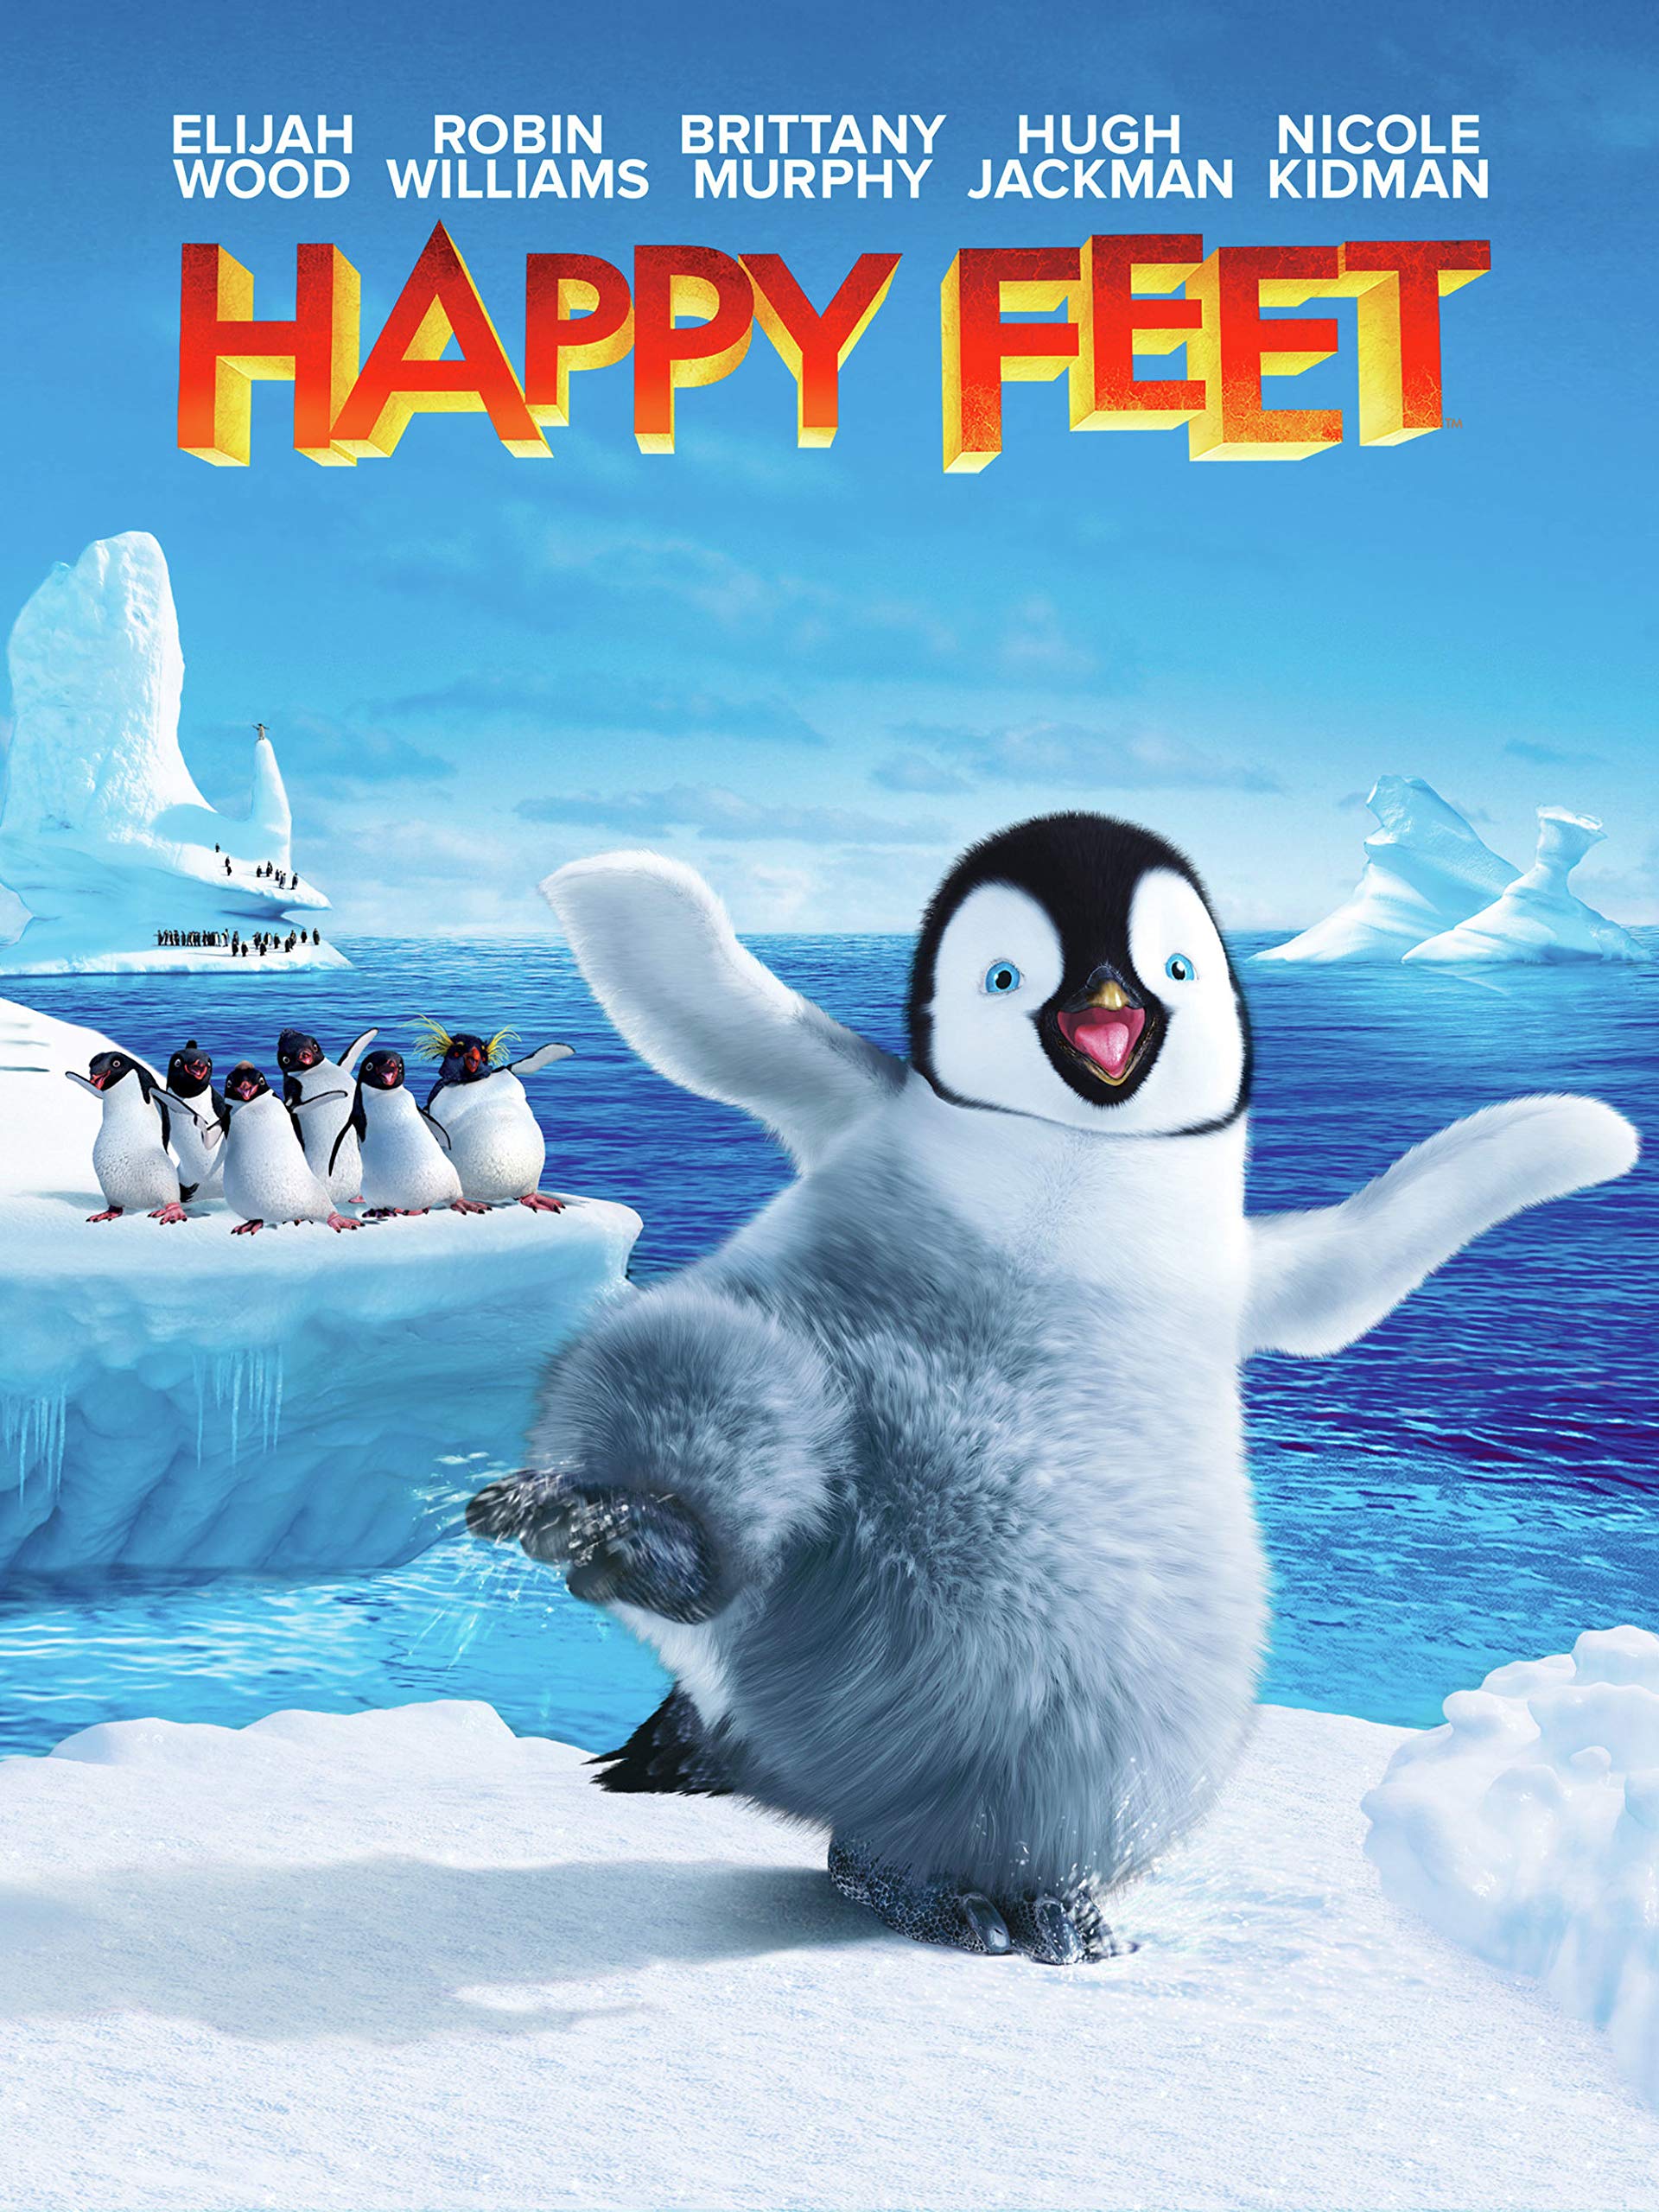 Stiahni si Filmy Kreslené Happy Feet / Happy Feet (2006)(SK)(1080p)